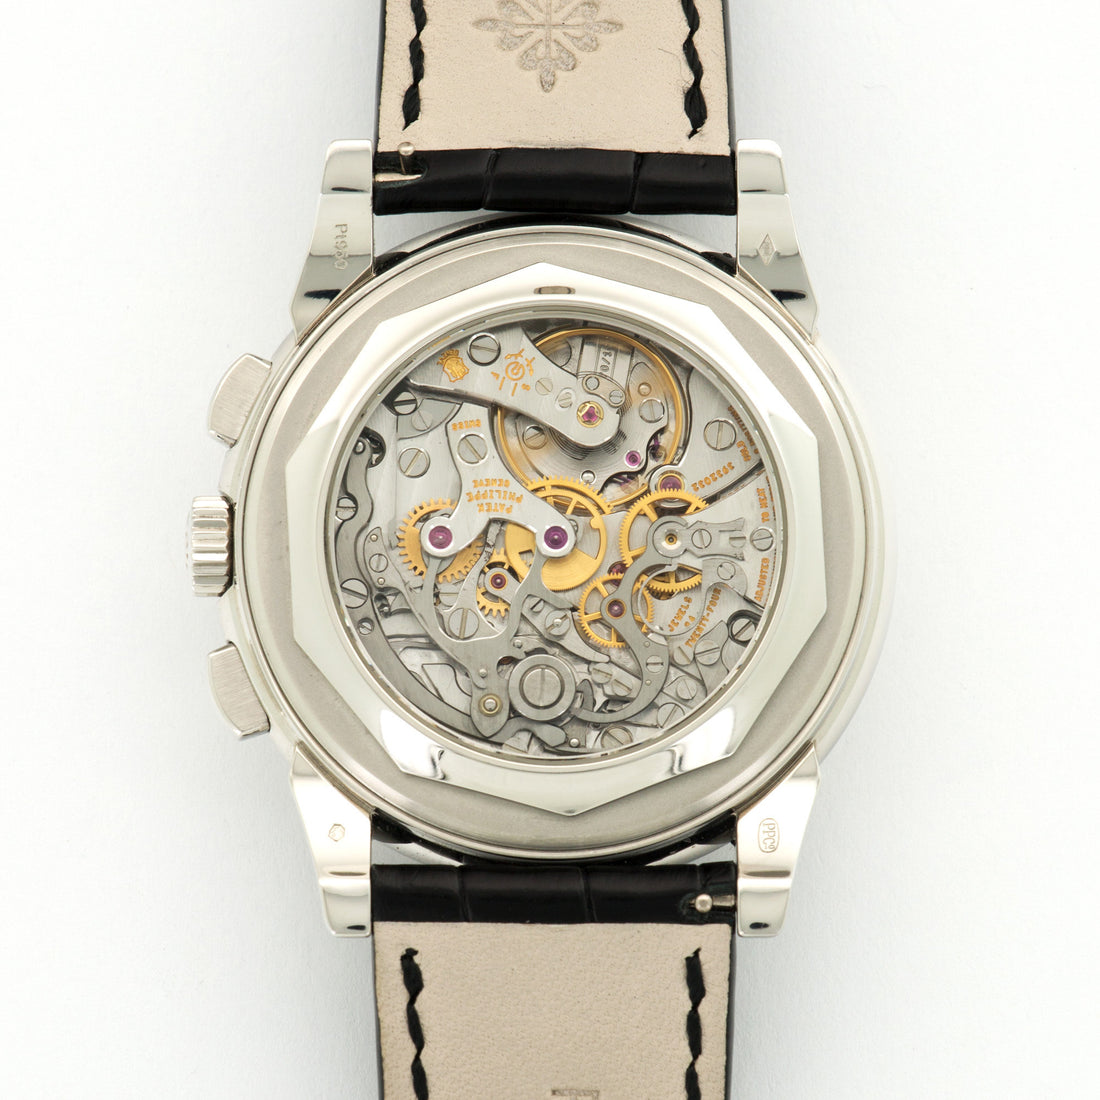 Patek Philippe Platinum Perpetual Calendar Chrono Watch Ref. 5970P